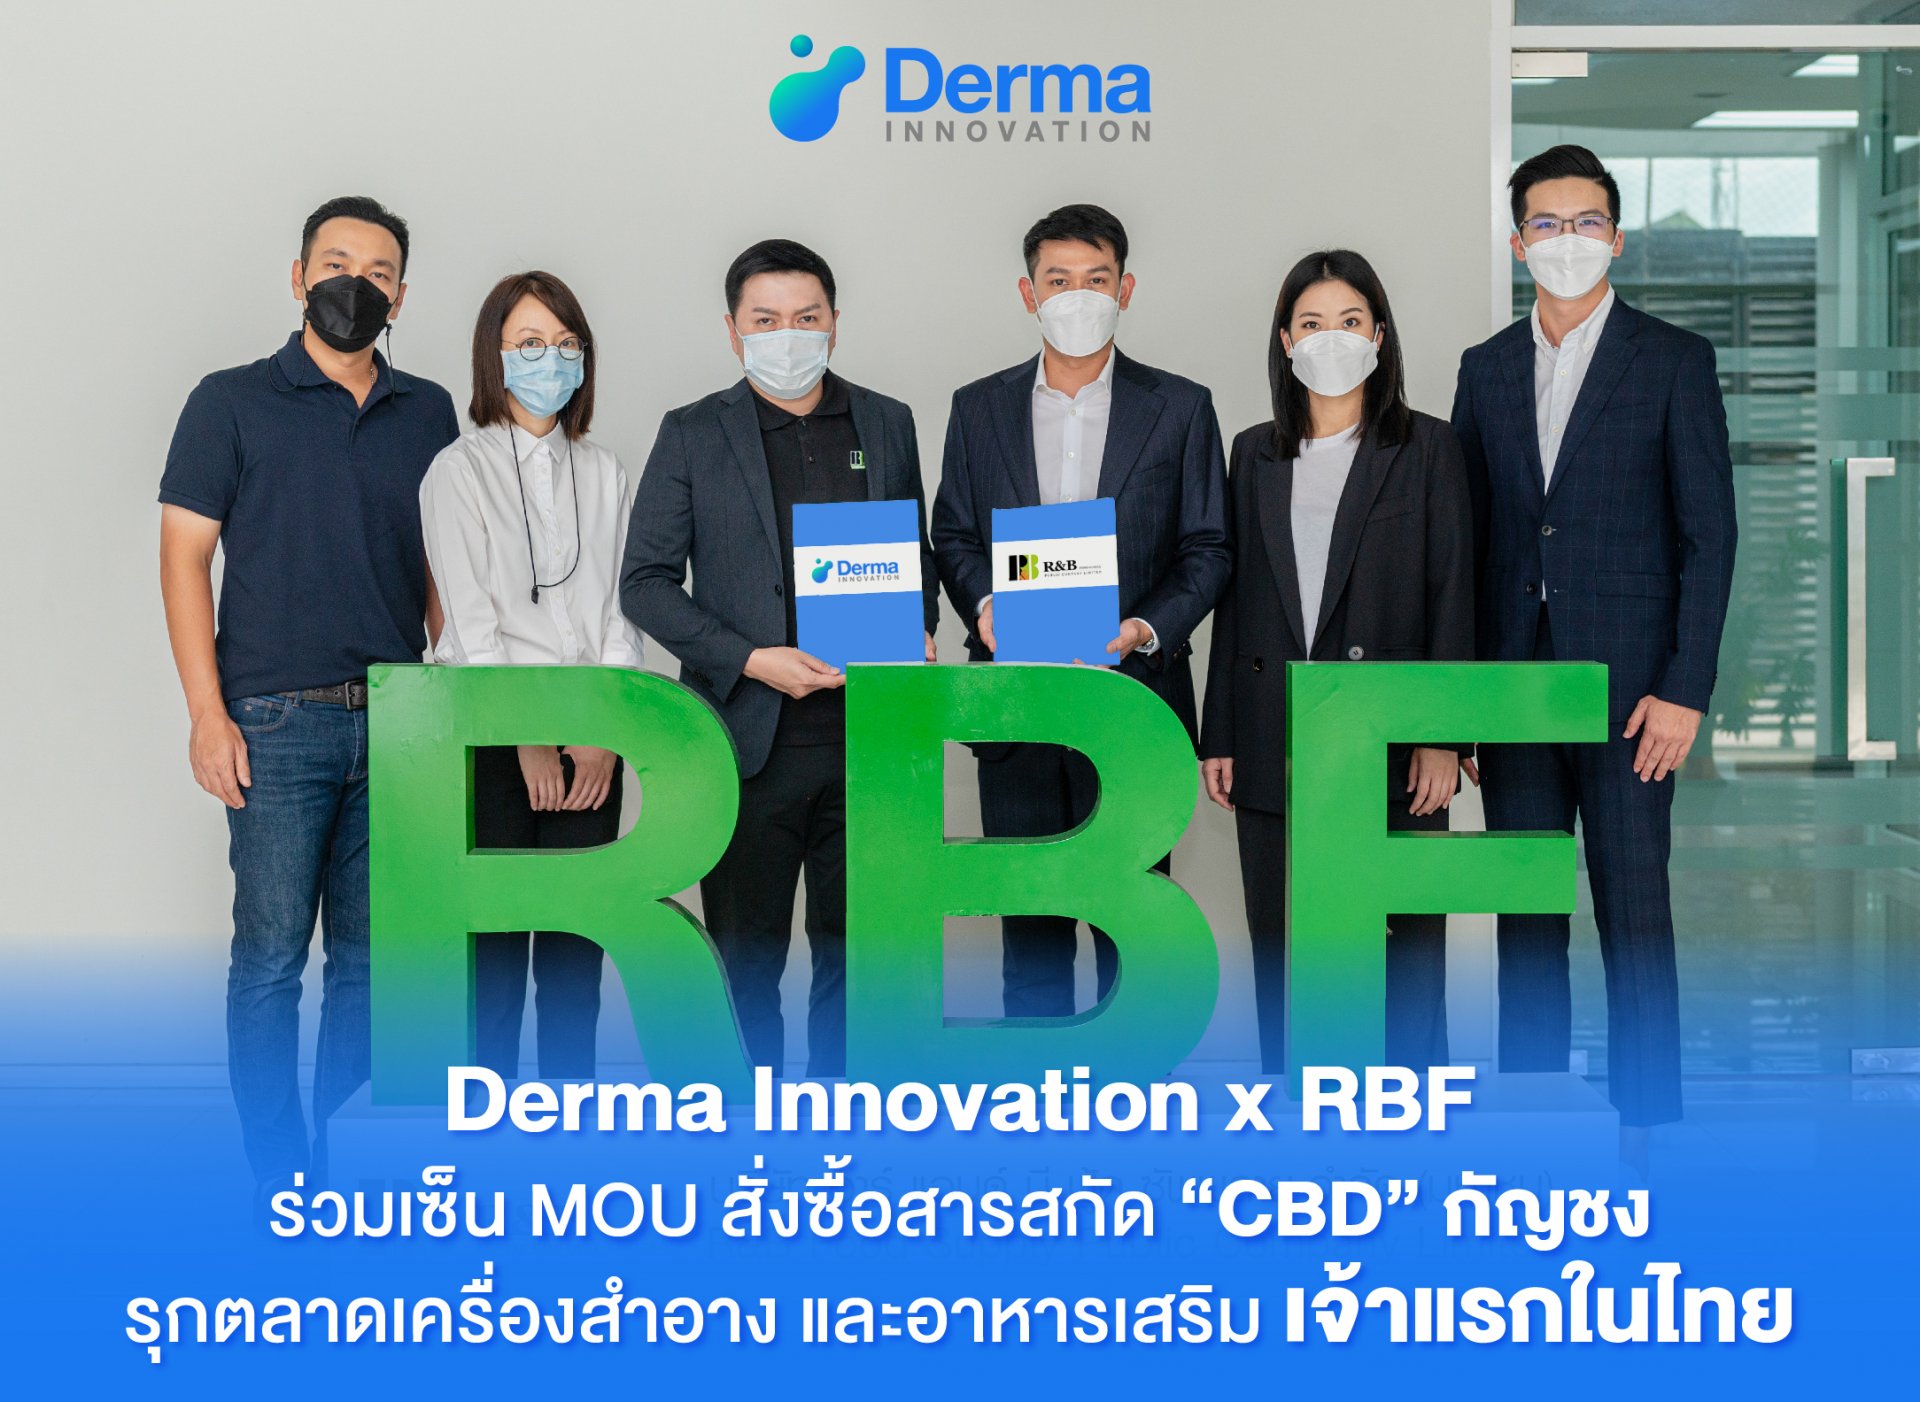 Derma x RBF  เซ็นสัญญาสั่งซื้อ CBD รุกตลาดเครื่องสำอาง และอาหารเสริม เจ้าแรกในไทย